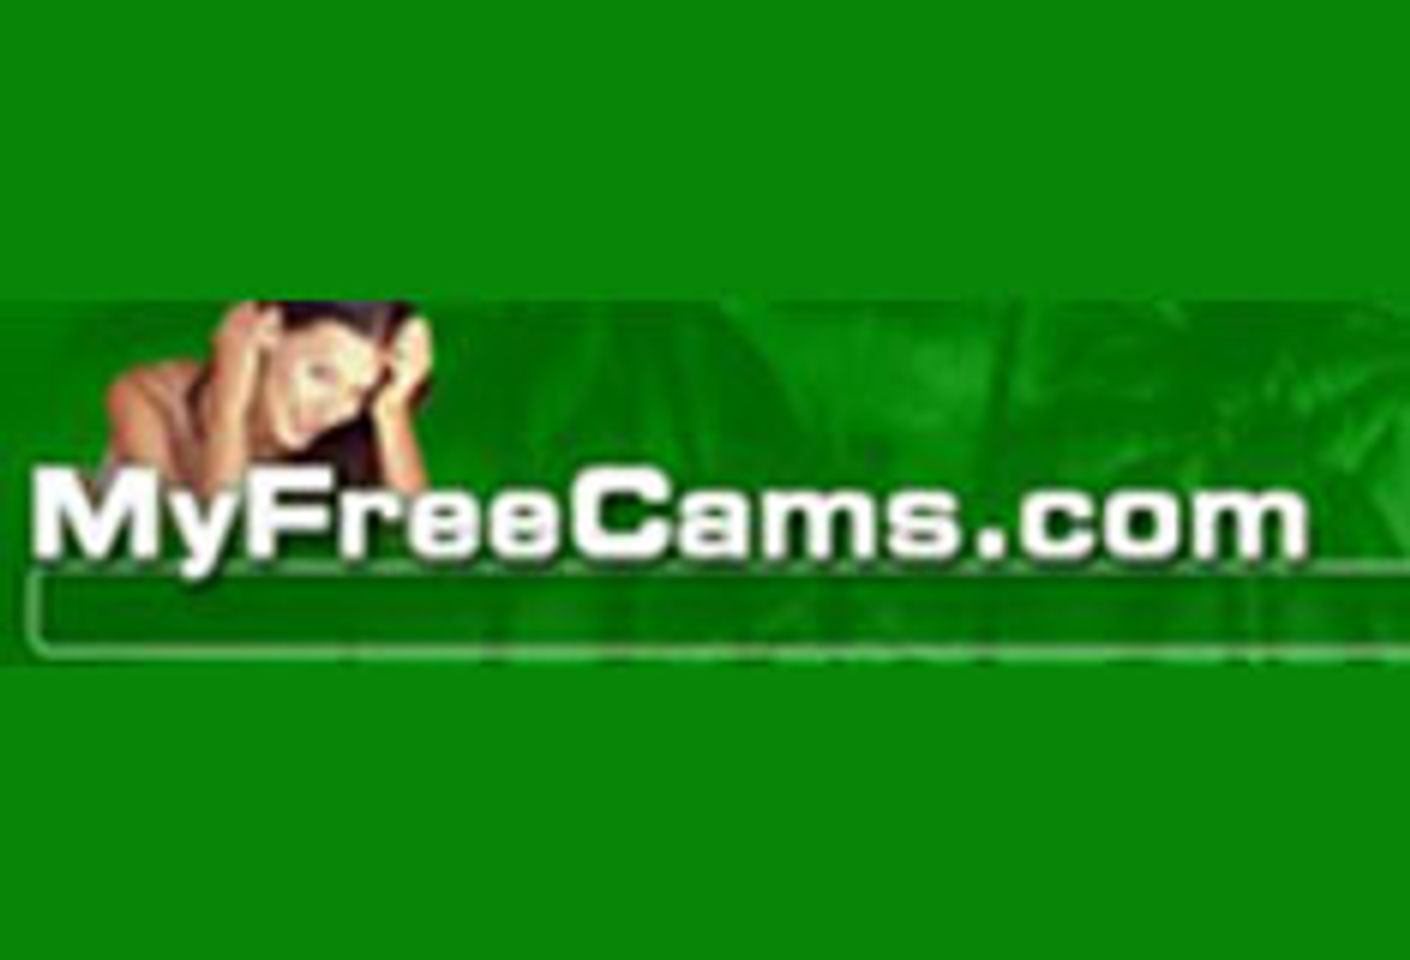 MyFreeCams is Presenting Sponsor for Exxxtacy 2011 Las Vegas